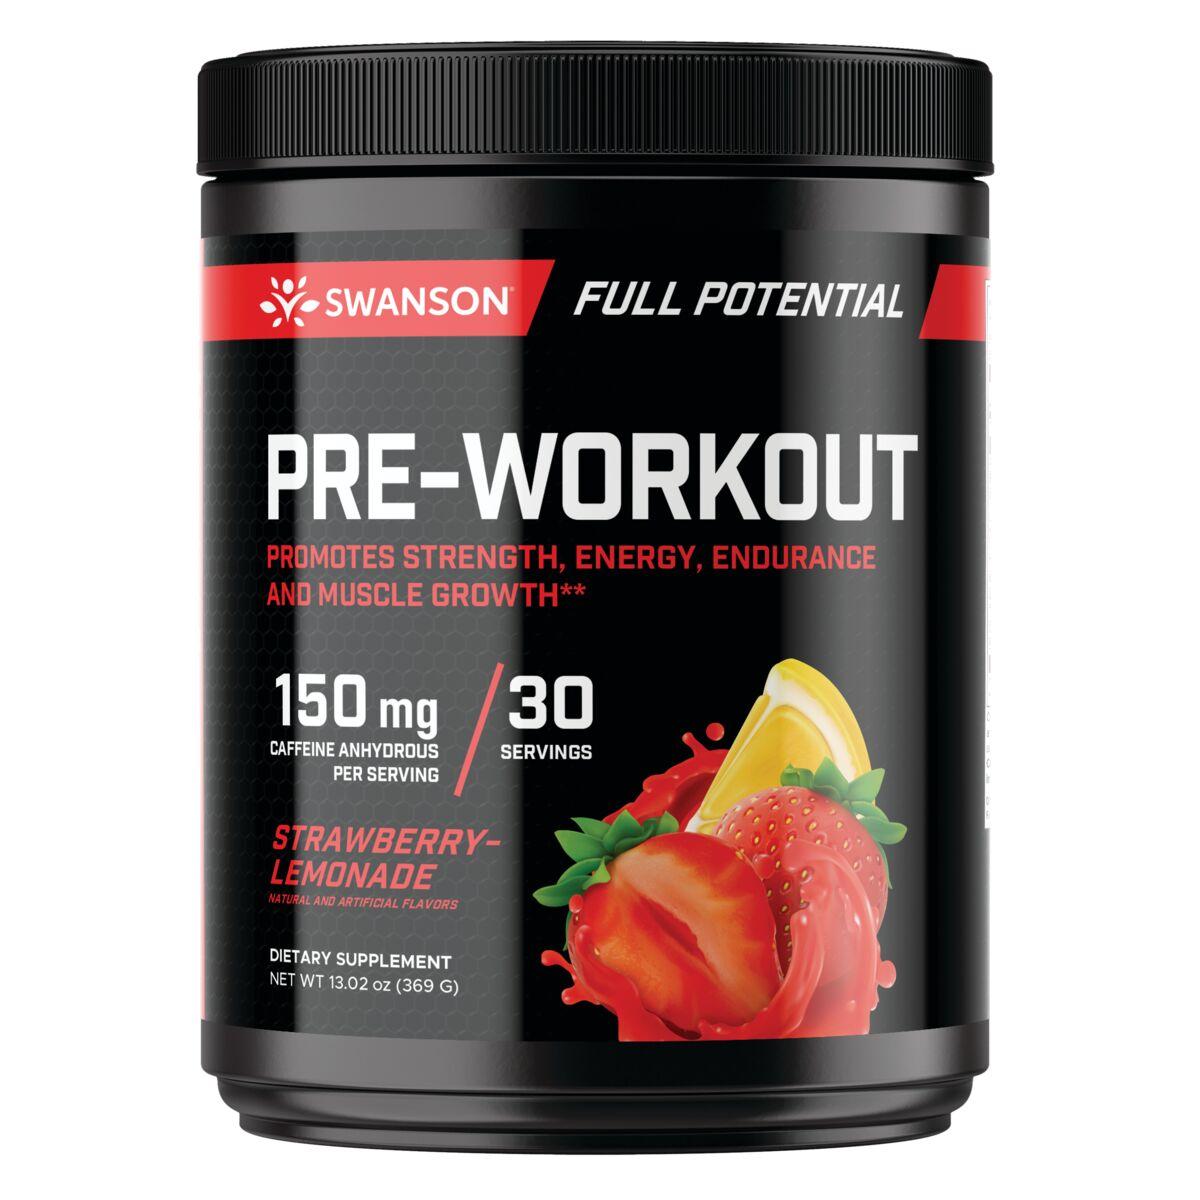 Swanson Premium Full Potential Pre-Workout - Strawberry-Lemonade Vitamin | 13.02 oz Powder